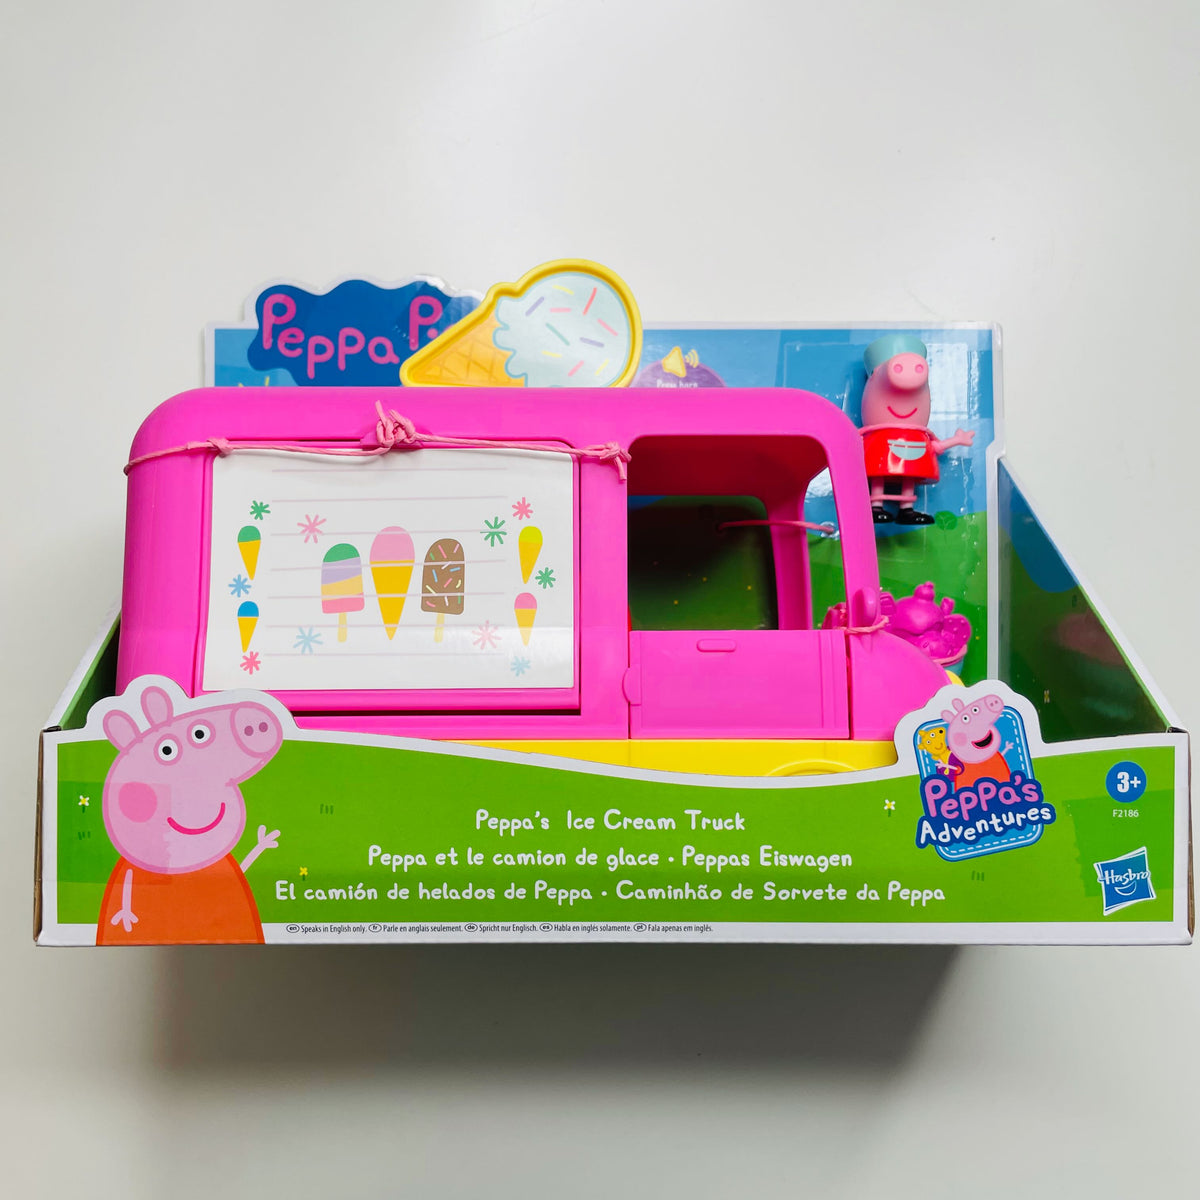 Hasbro Peppa's Adventures Peppa Pig Peppa's Ice Cream Truck